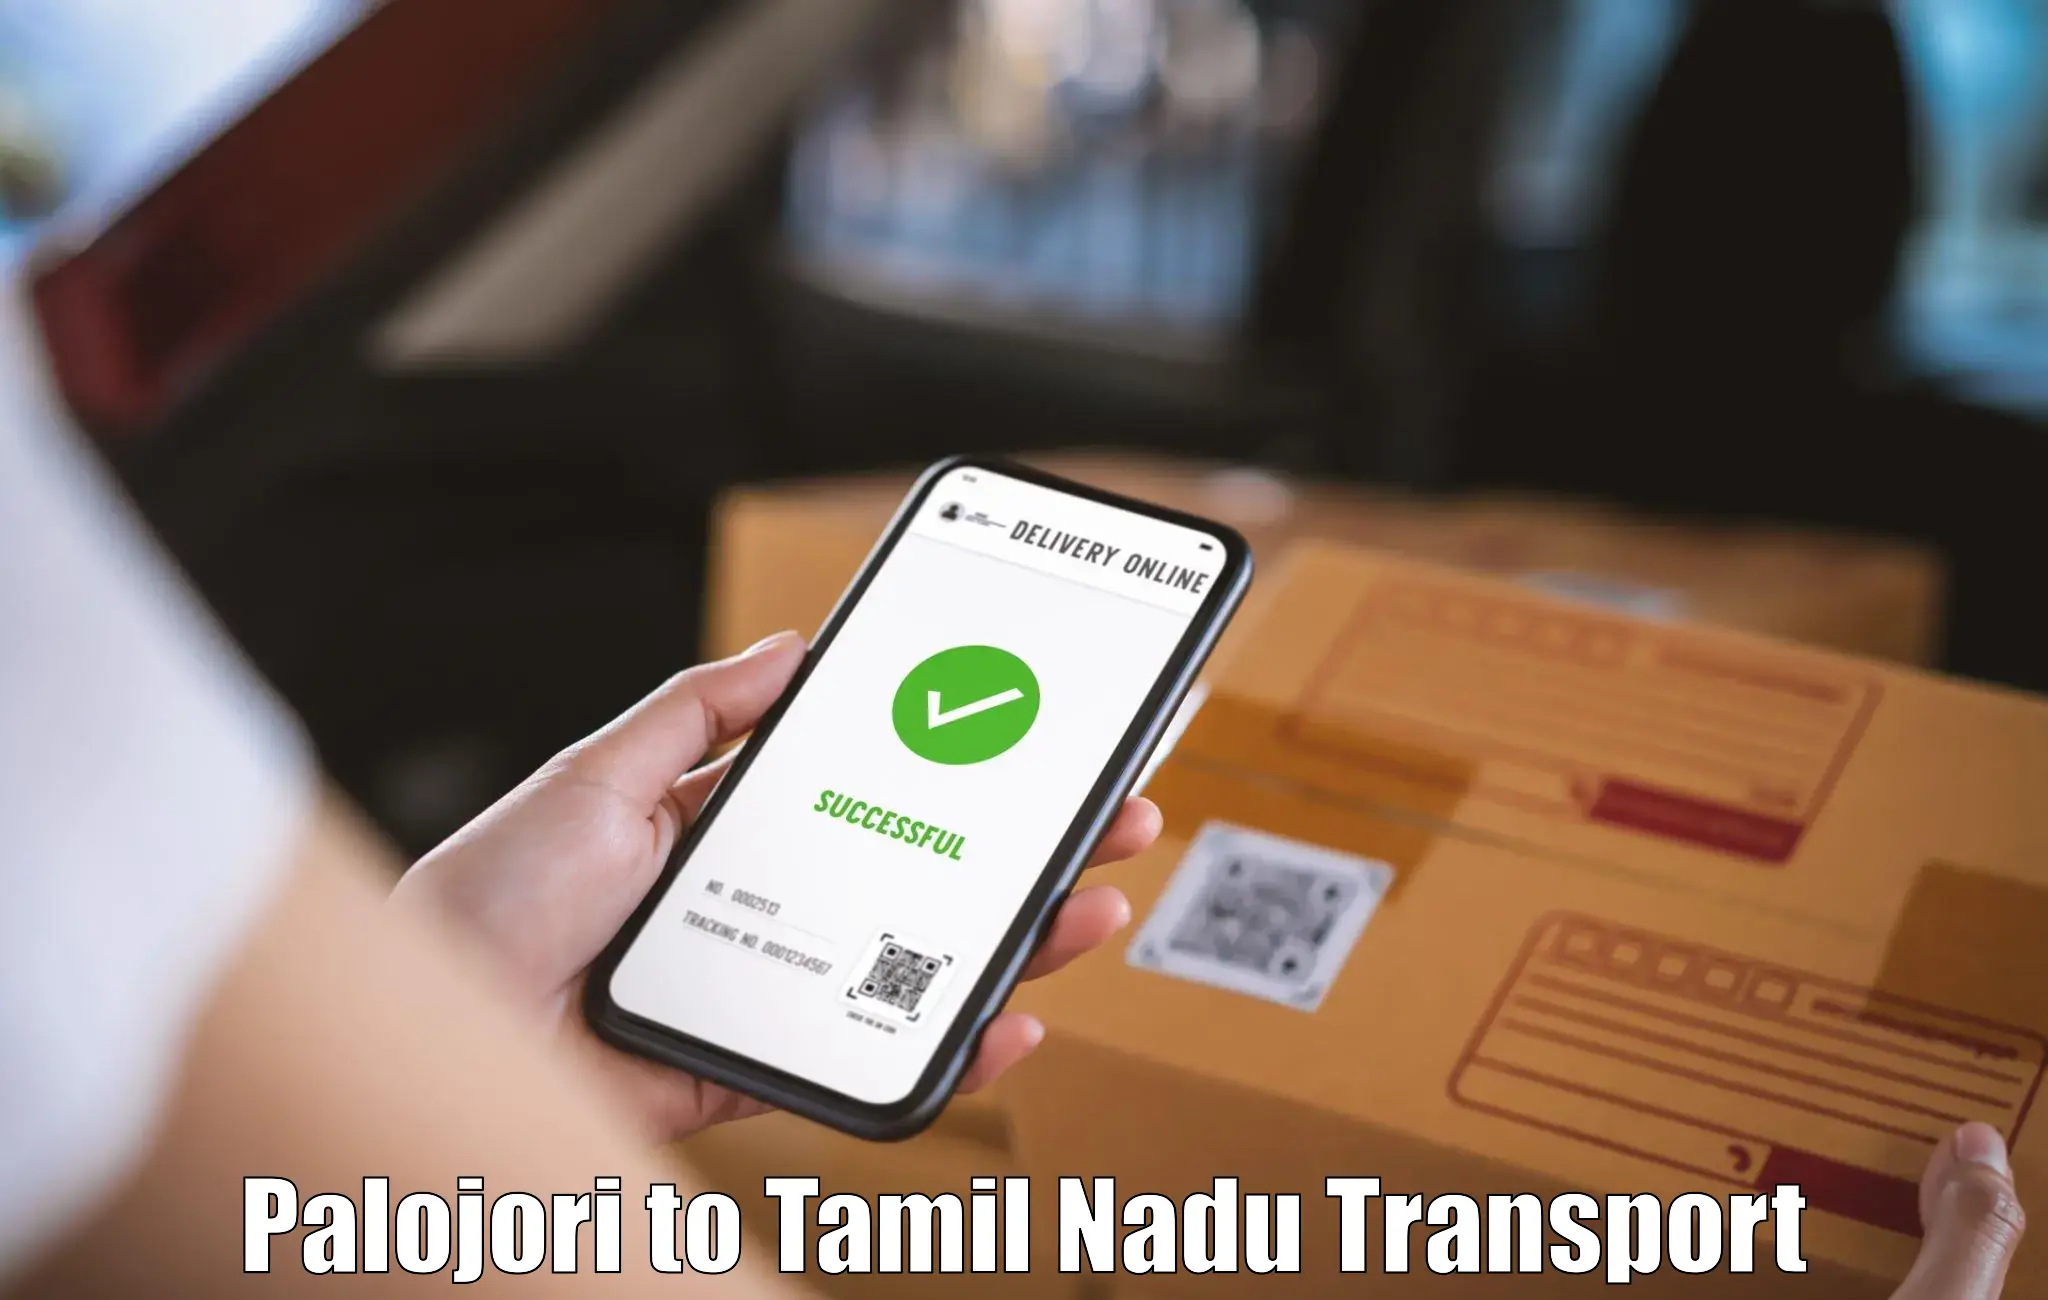 Pick up transport service Palojori to Tiruvallur